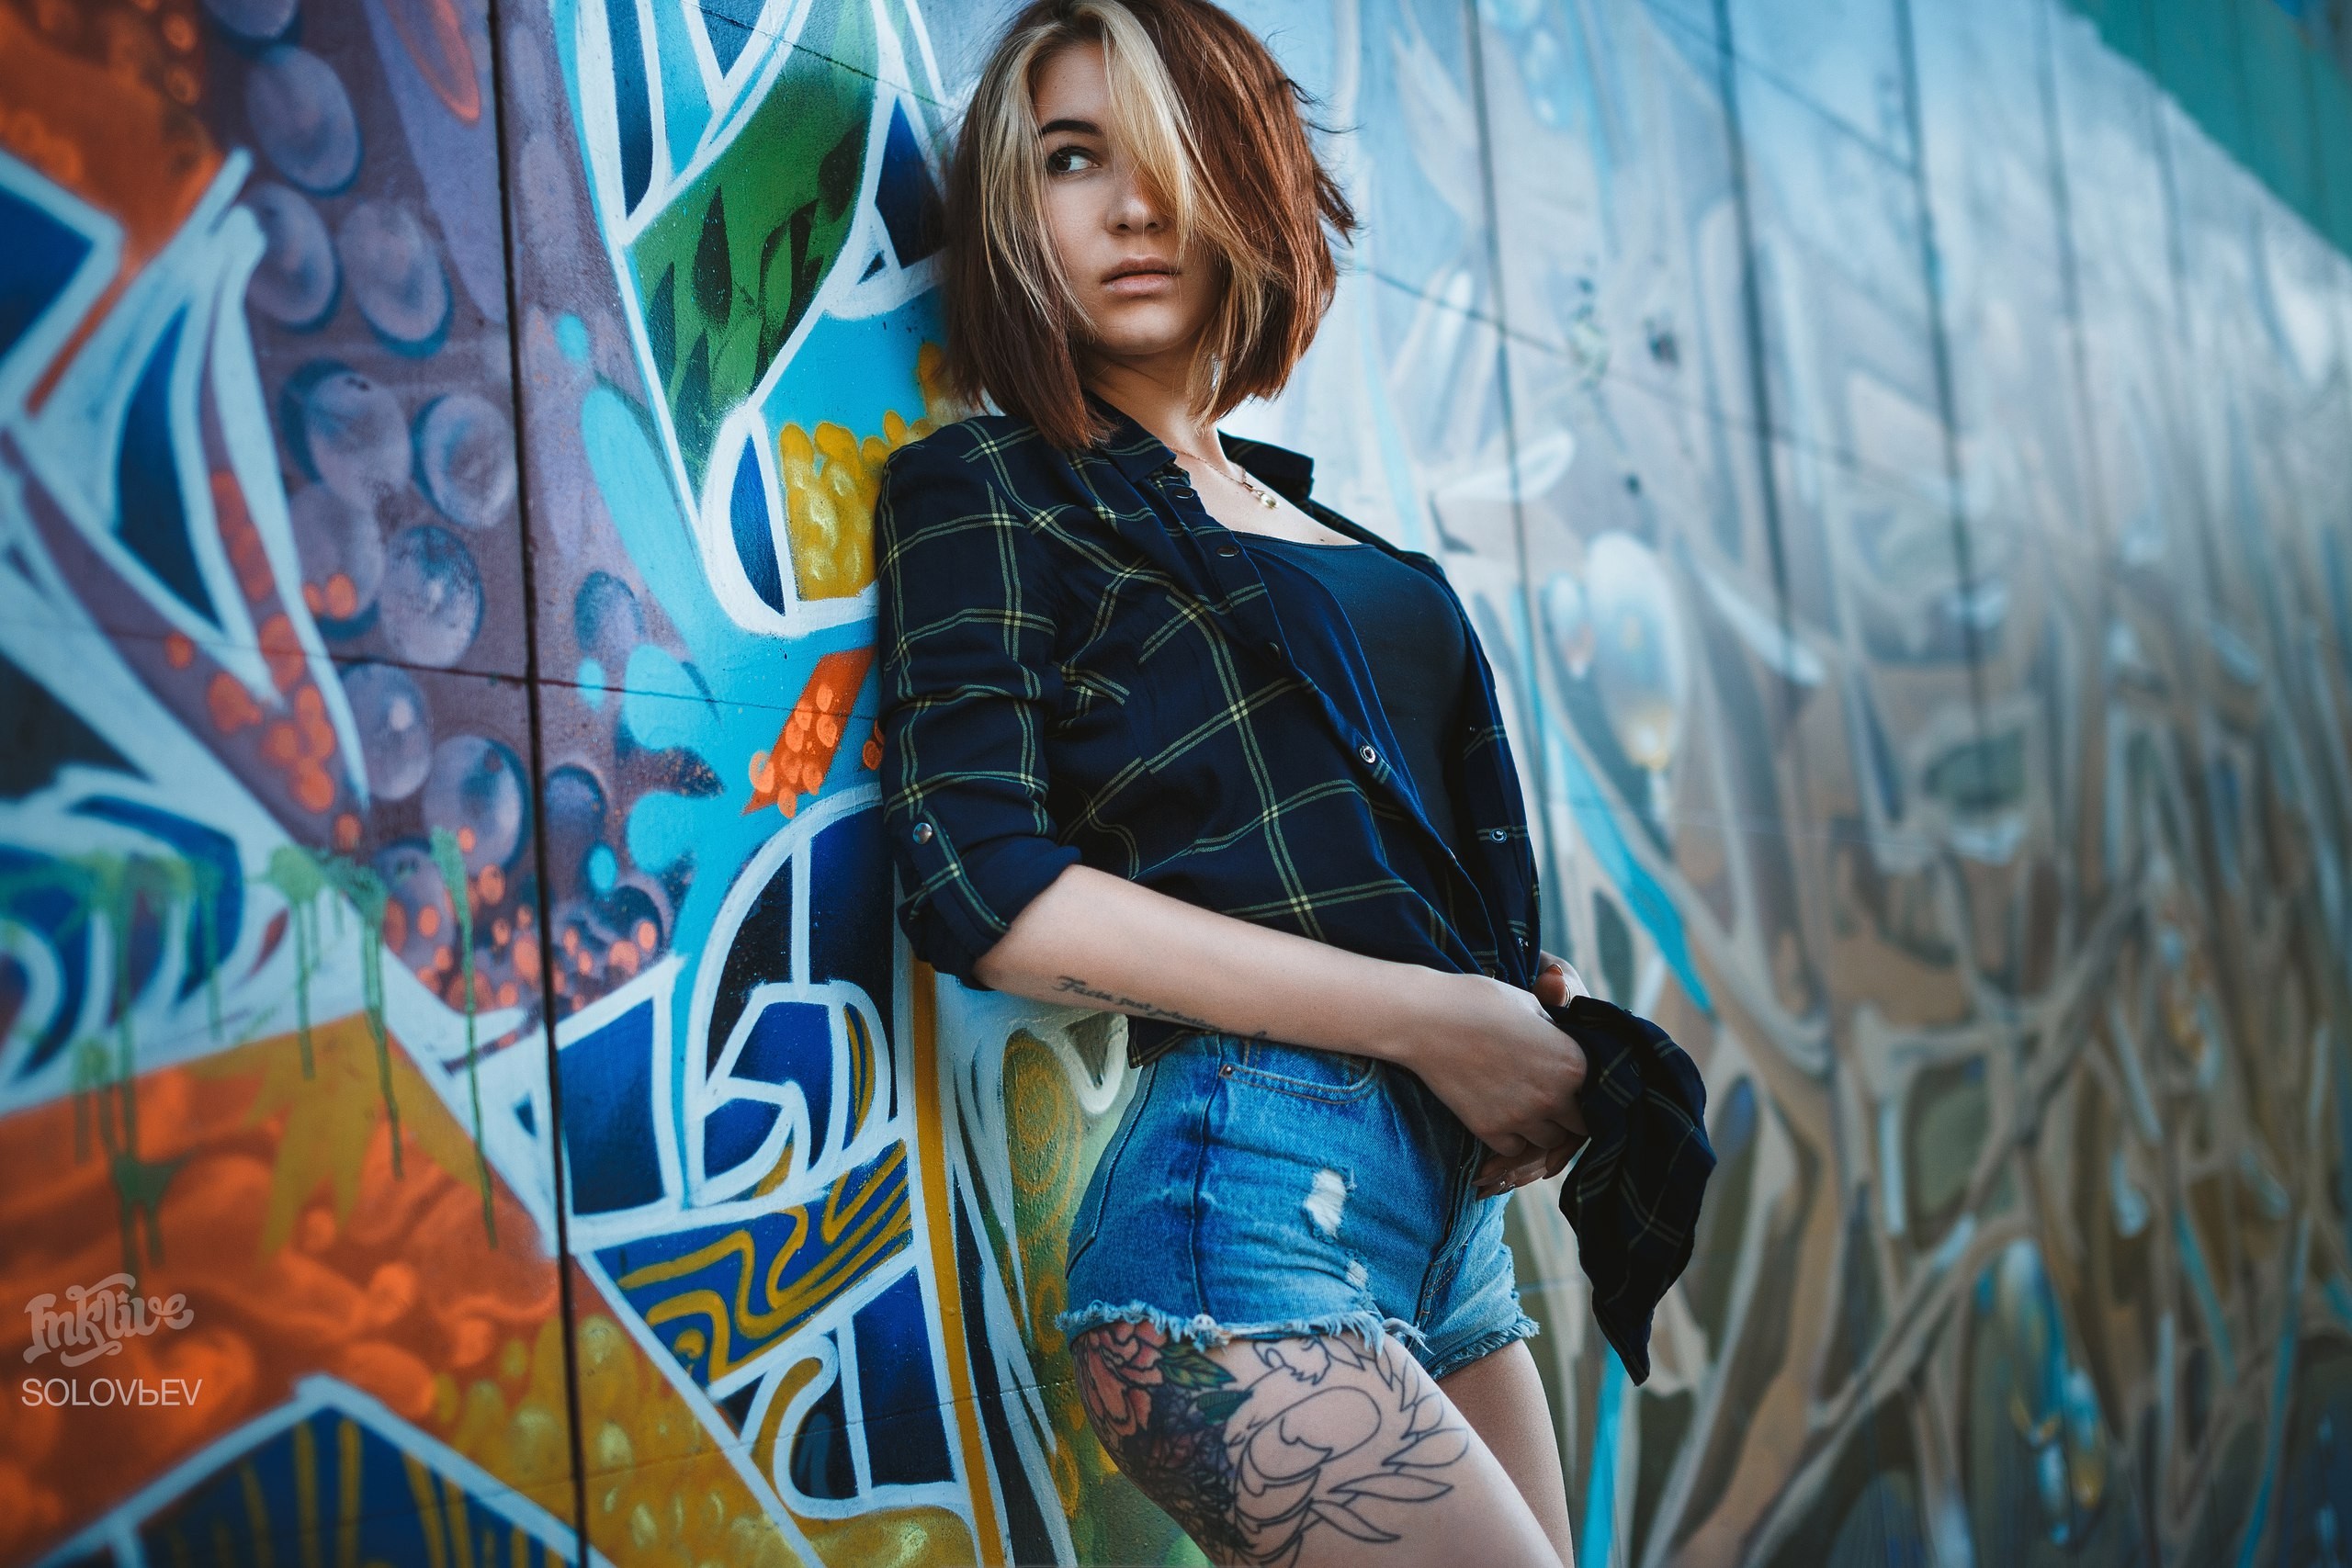 Women Model Dyed Hair Tattoo Portrait Shirt Wall Looking Away Valery Slavgorodskaya Solovbev 2560x1707